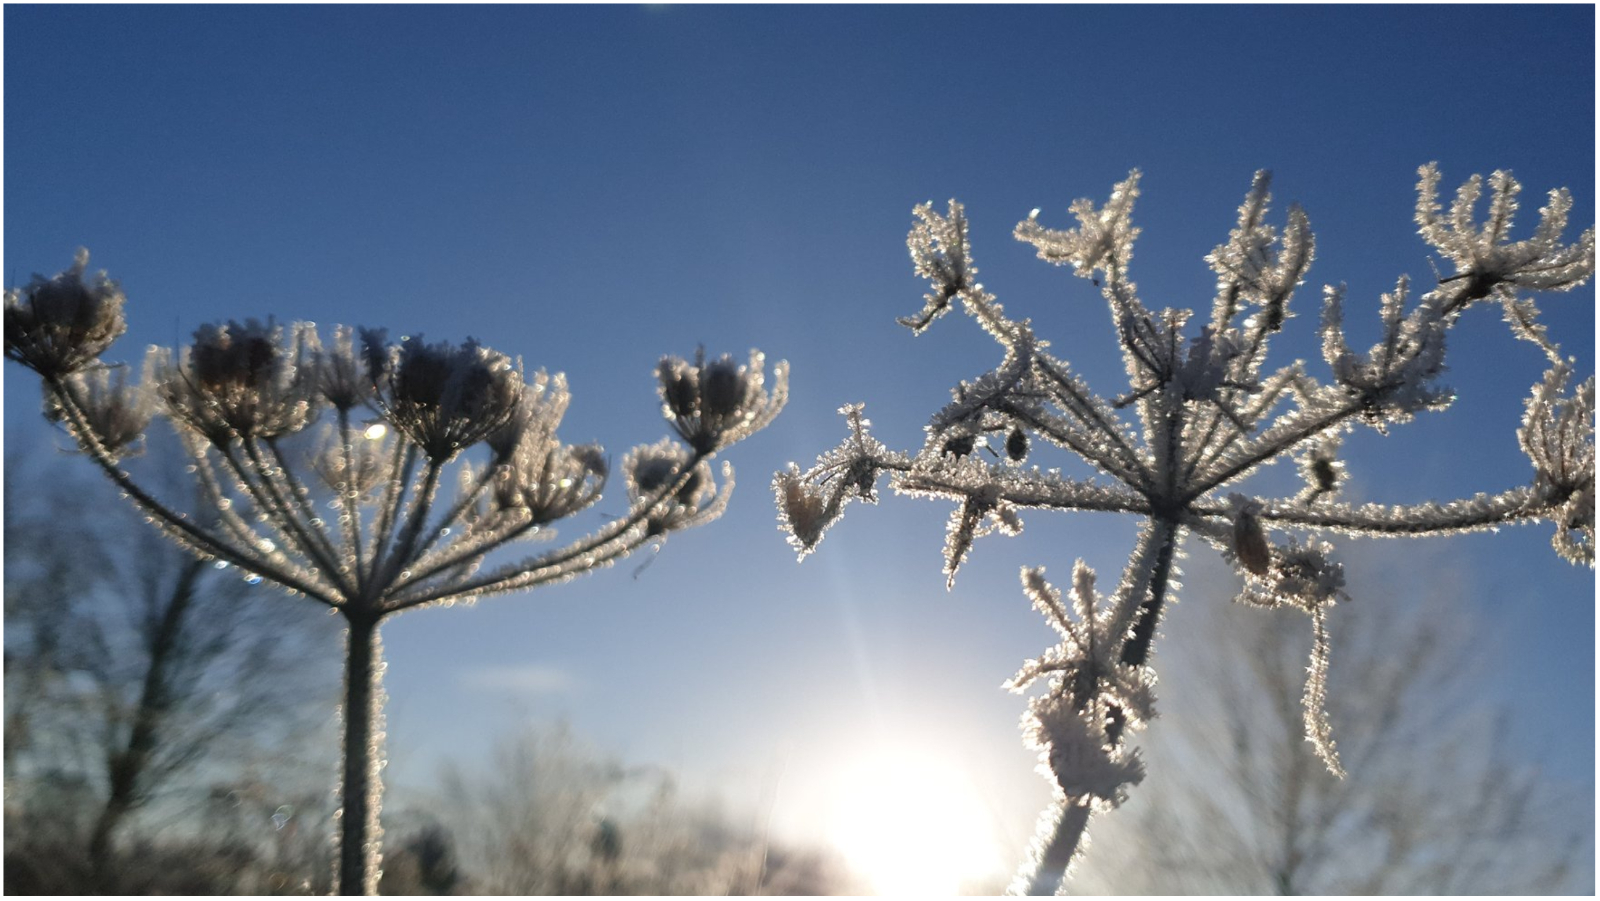 The sun made frozen plants glisten.